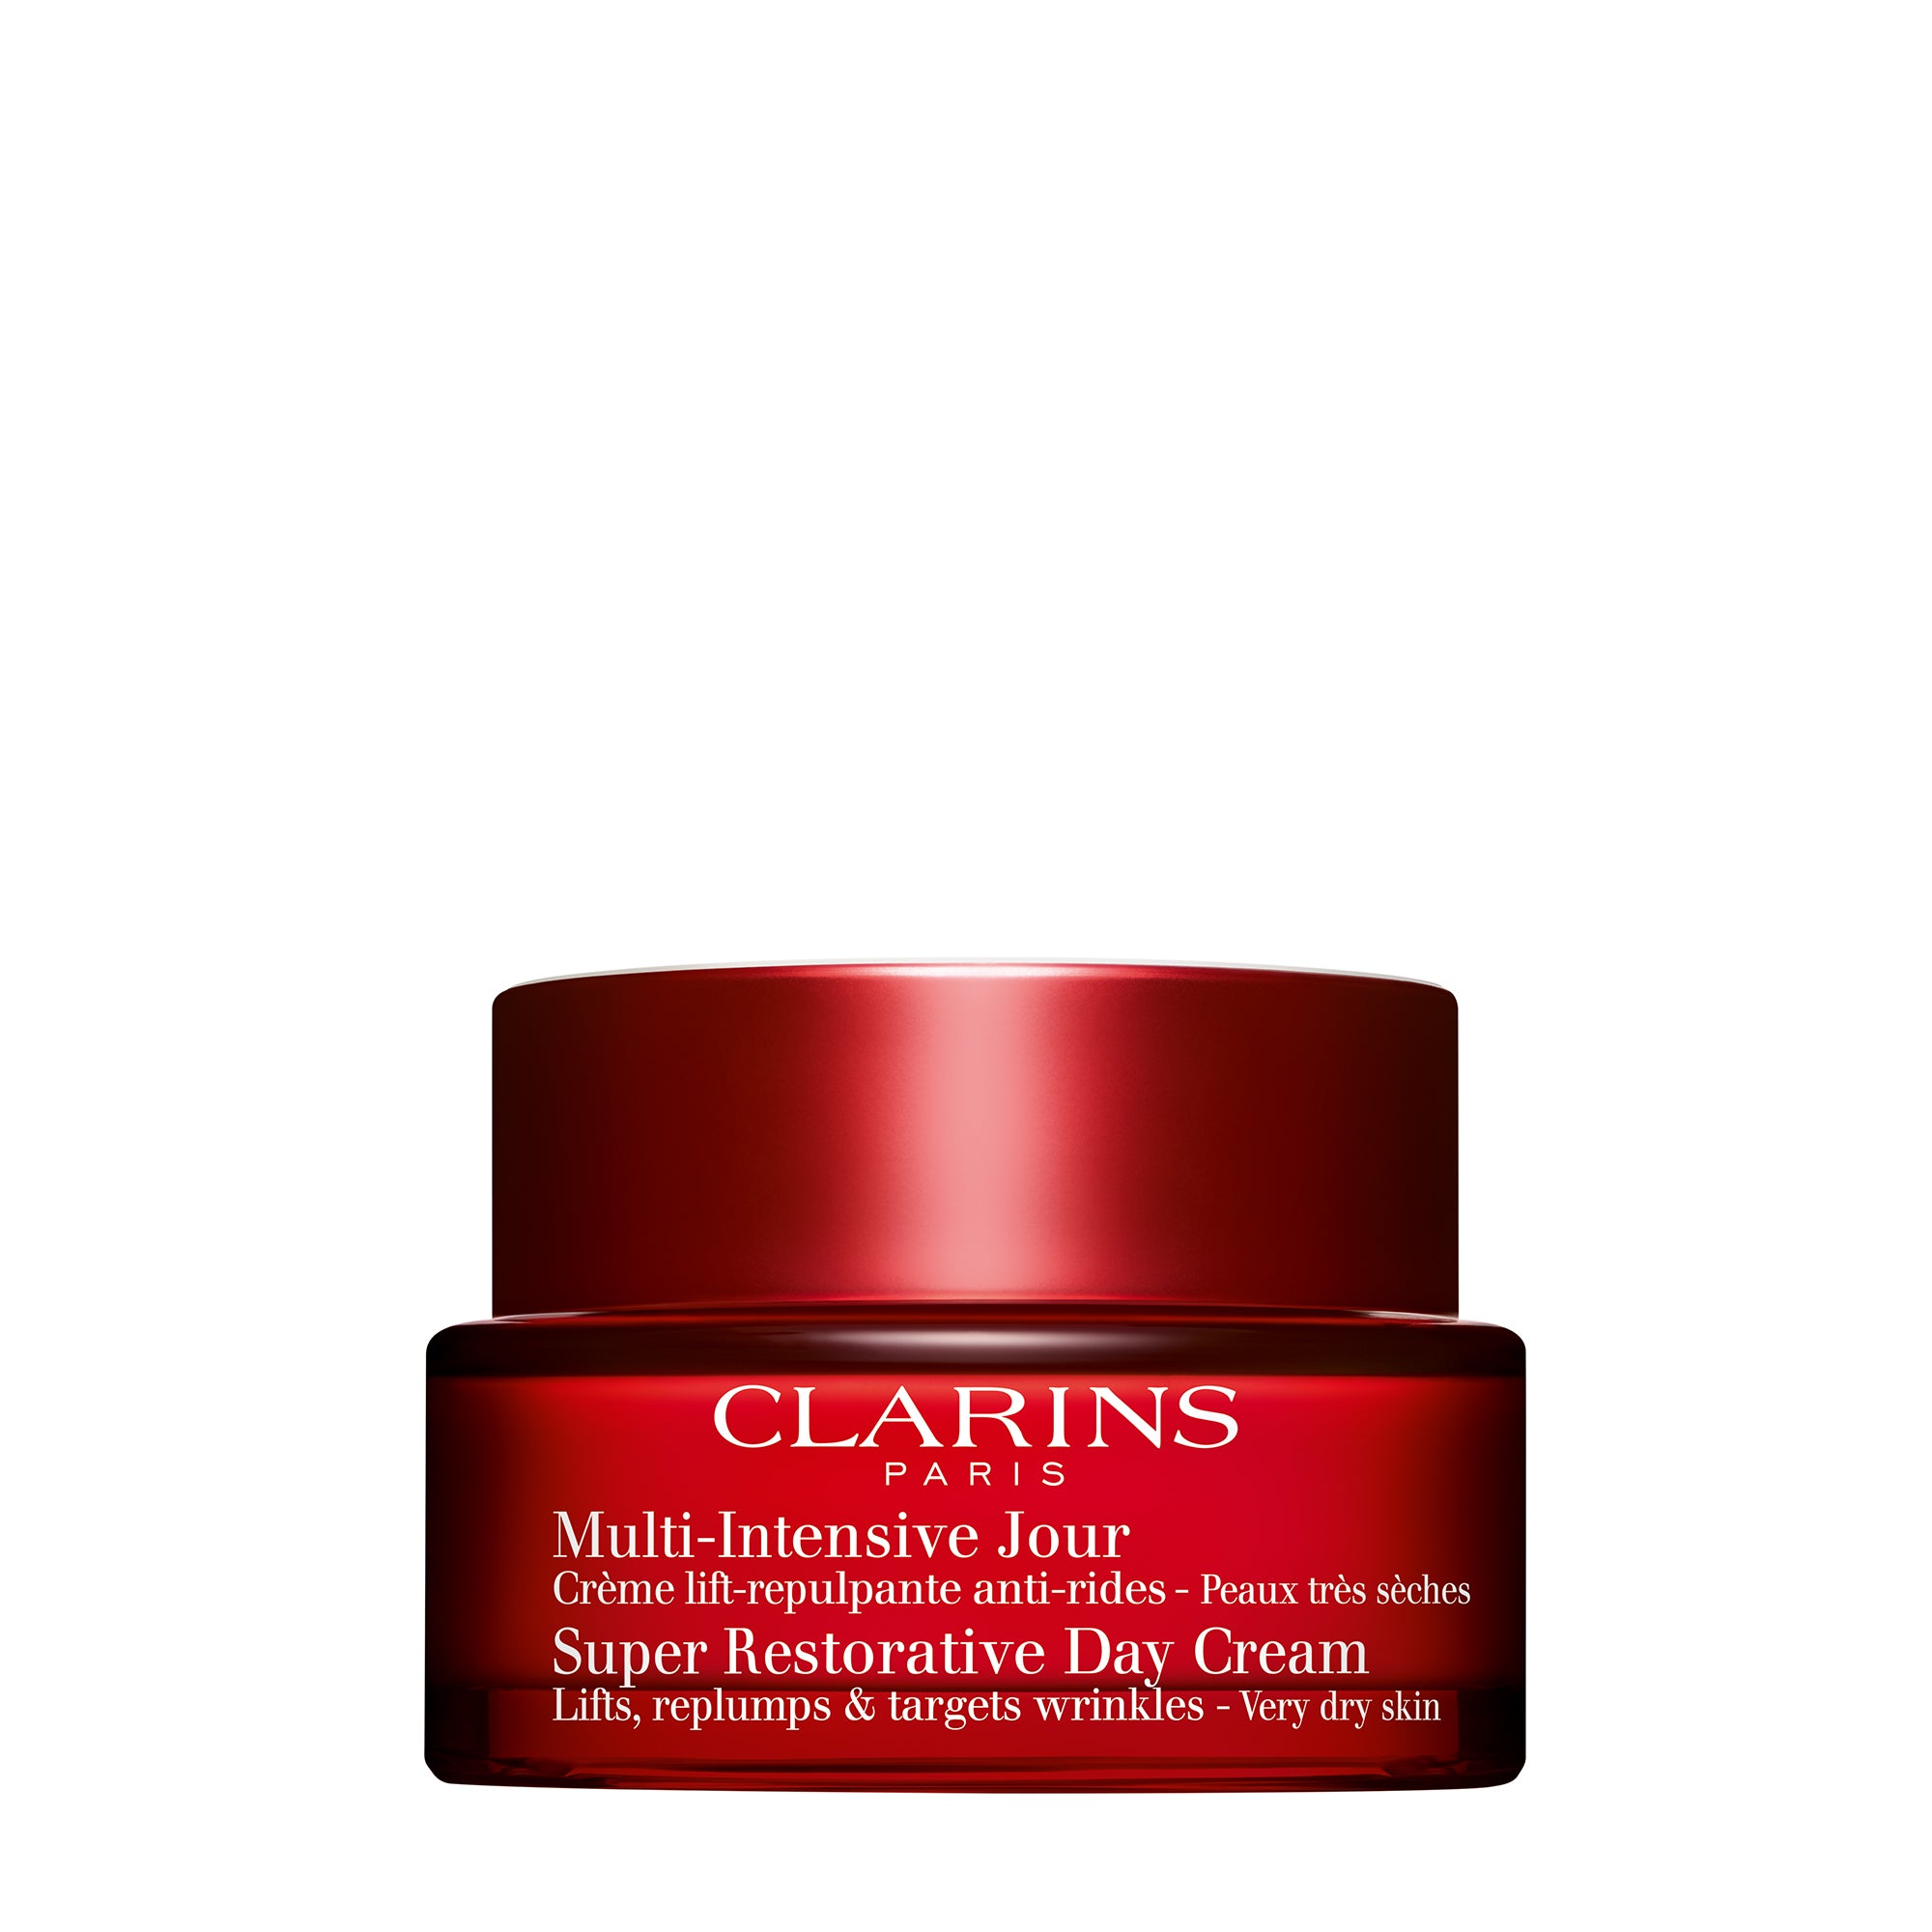 Clarins Super Restorative Day Cream VDS 50ml Image